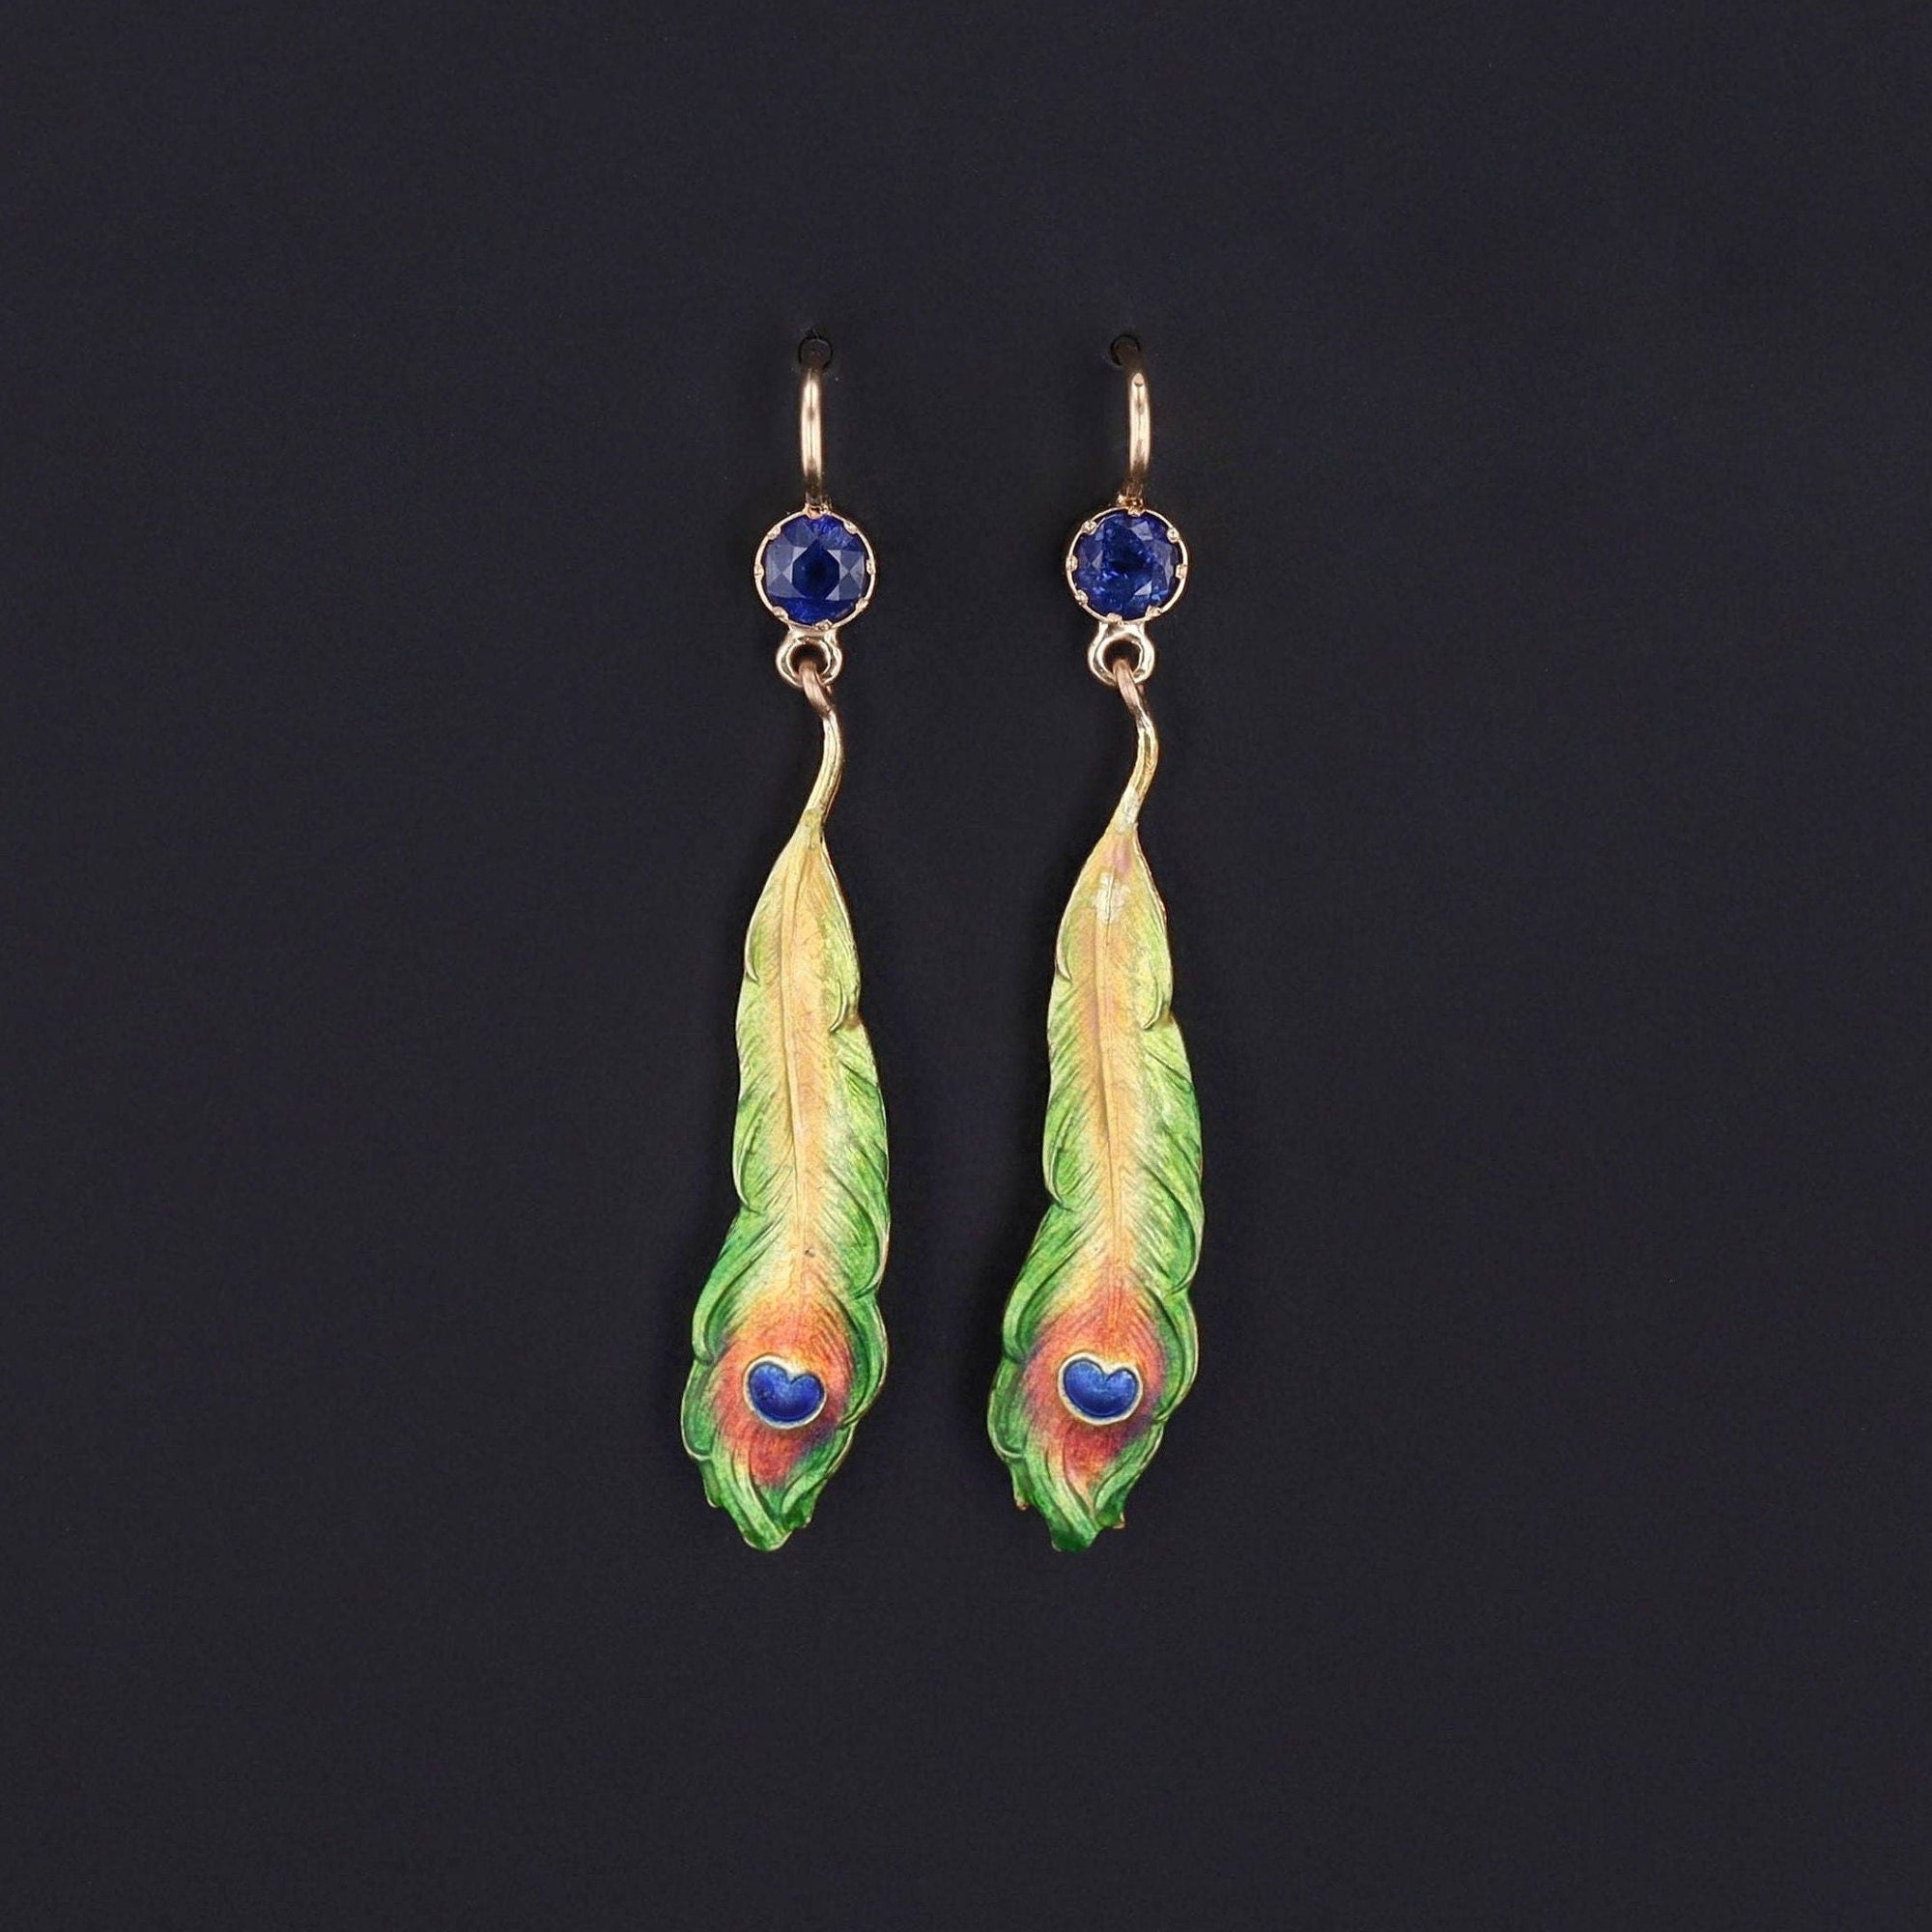 Peacock Feather Earrings | Antique Earrings 